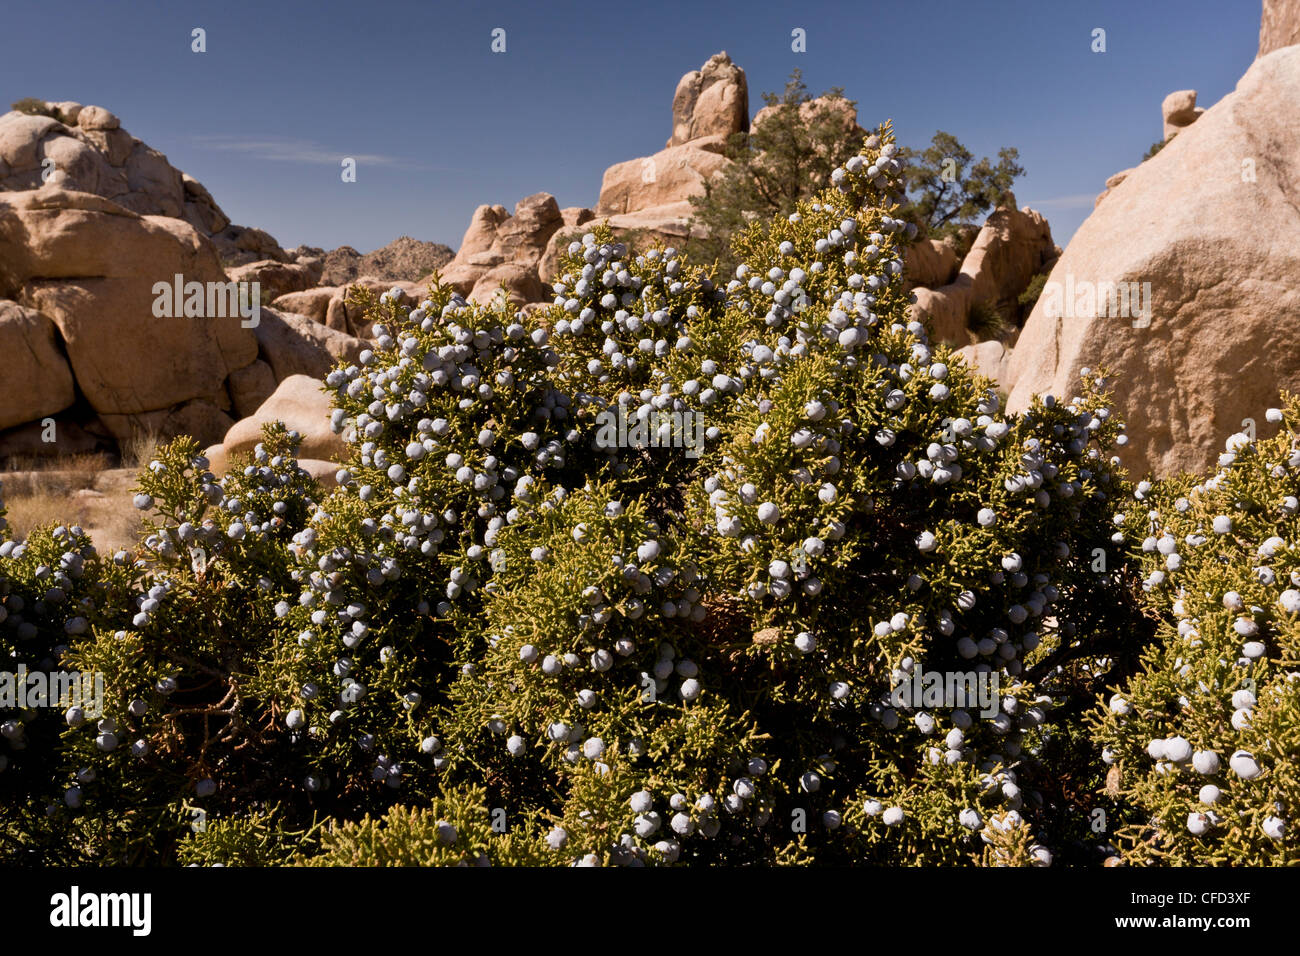 Le genévrier, Juniperus californica californien dans les fruits ; Parc National de Joshua Tree, California, USA Banque D'Images